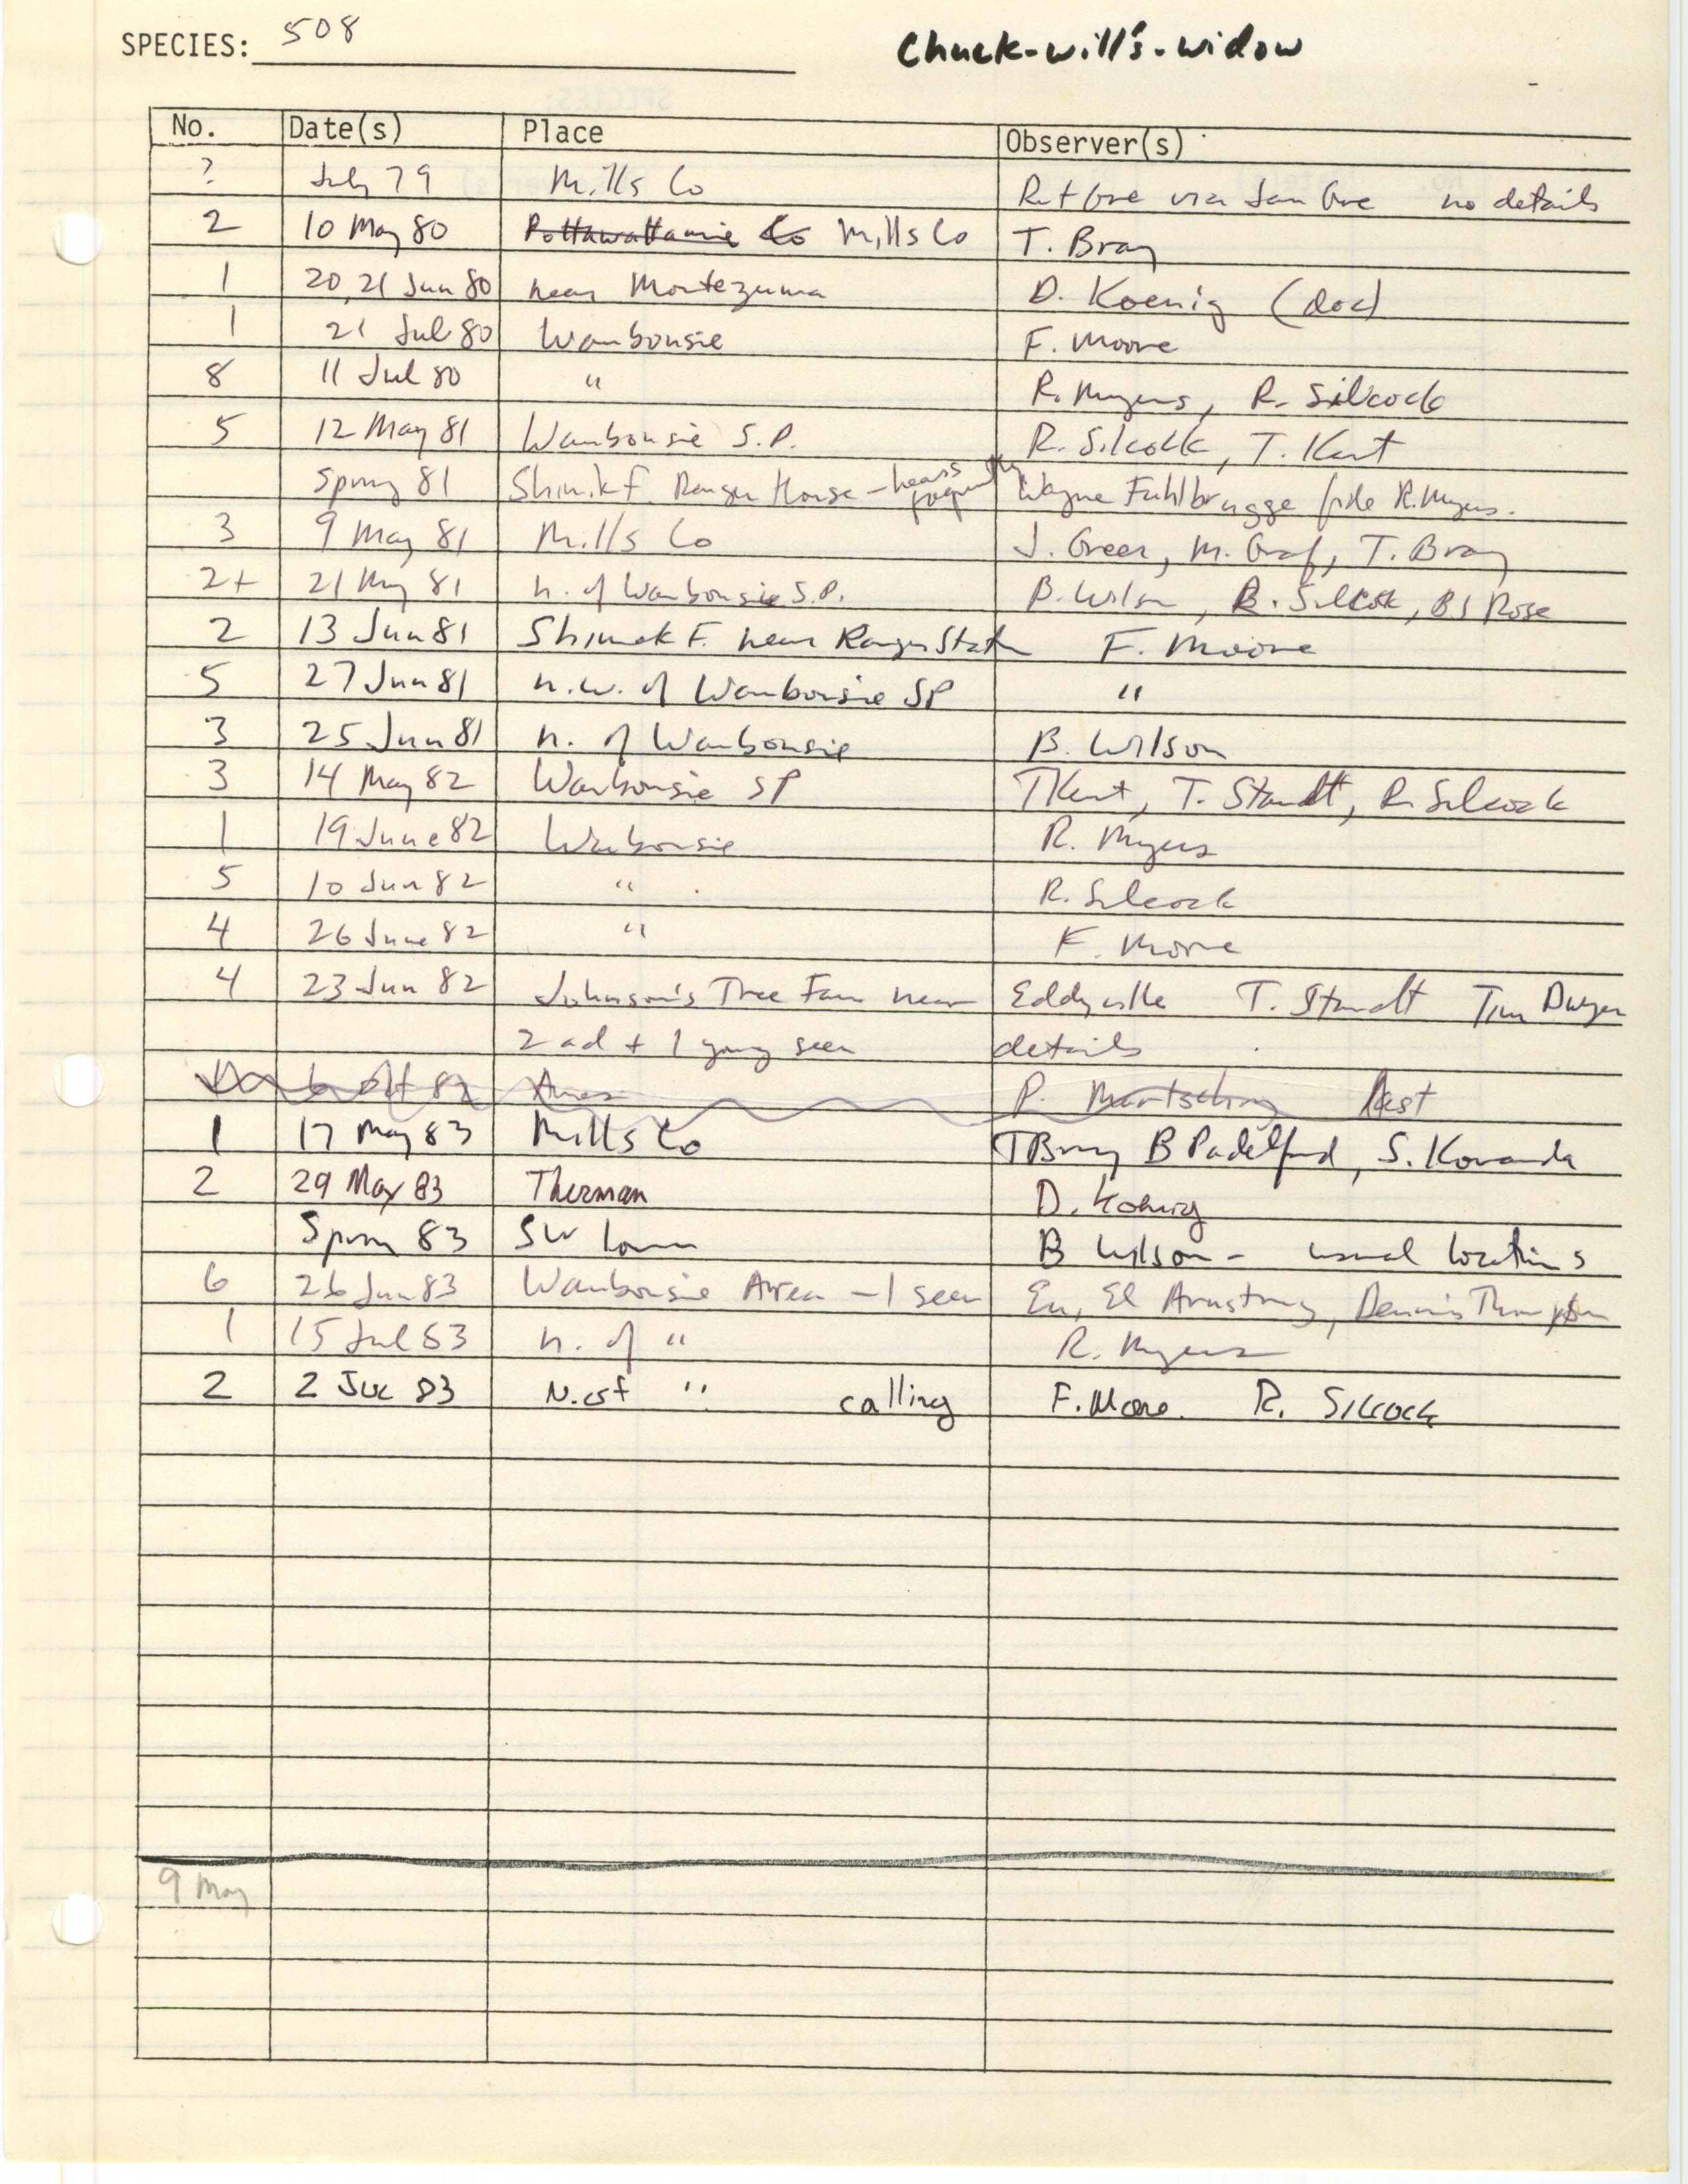 Iowa Ornithologists' Union, field report compiled data, Chuck-will's-widow, 1979-1983